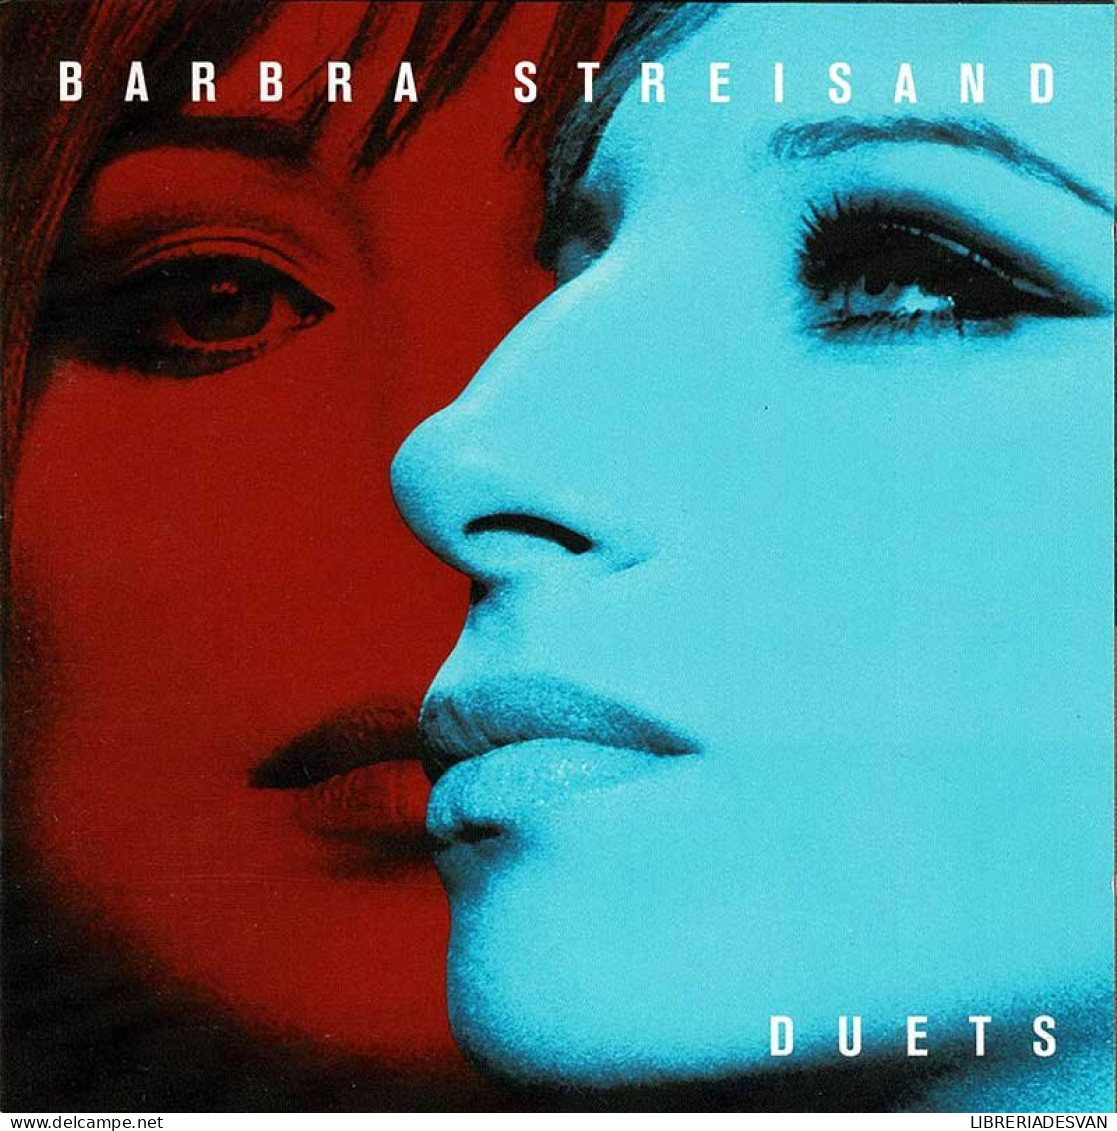 Barbra Streisand - Duets. CD - Disco, Pop